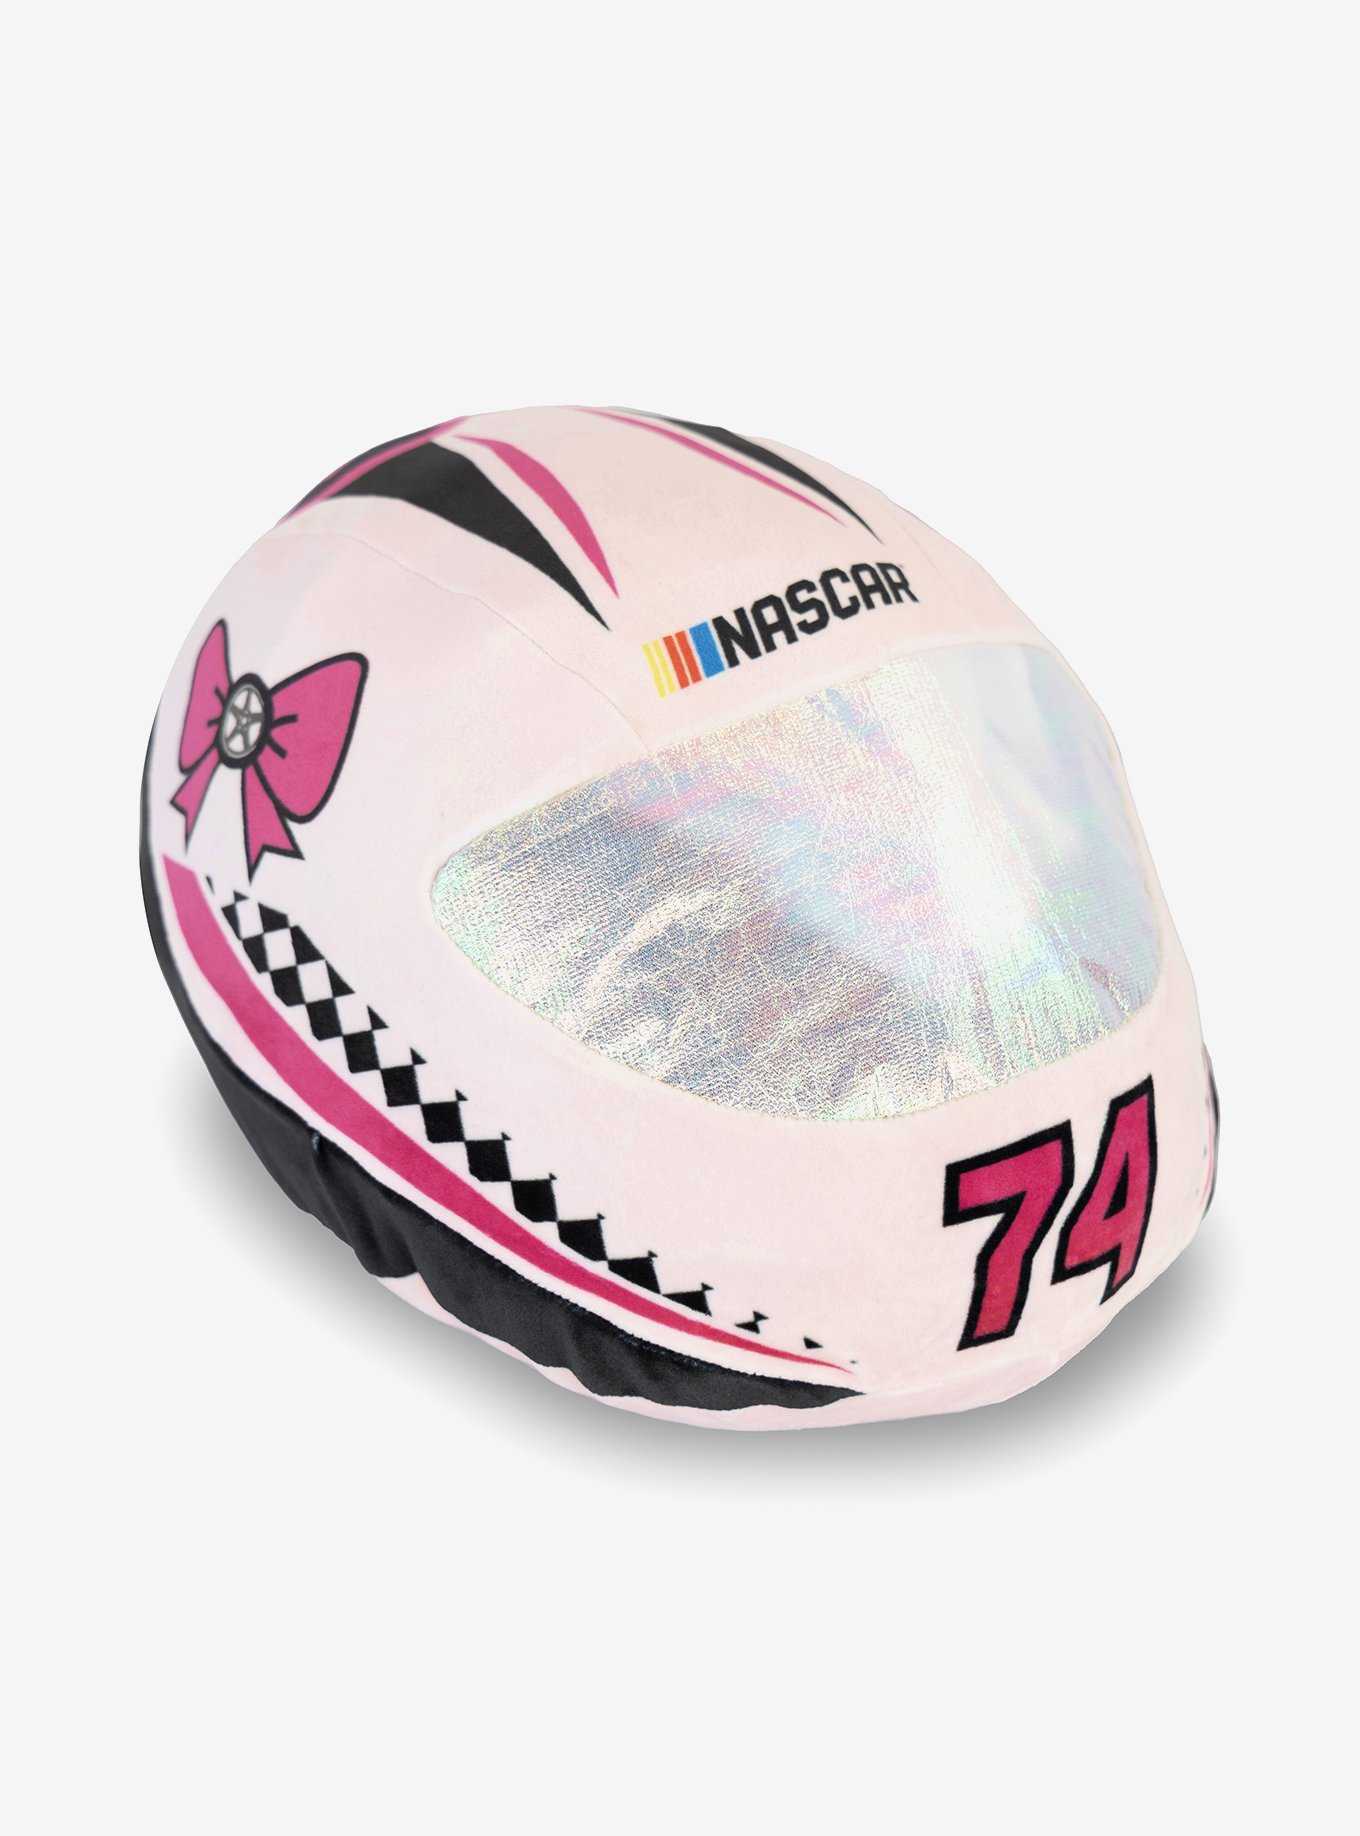 Plushible 2-in-1 NASCAR Snugible Pink, , hi-res